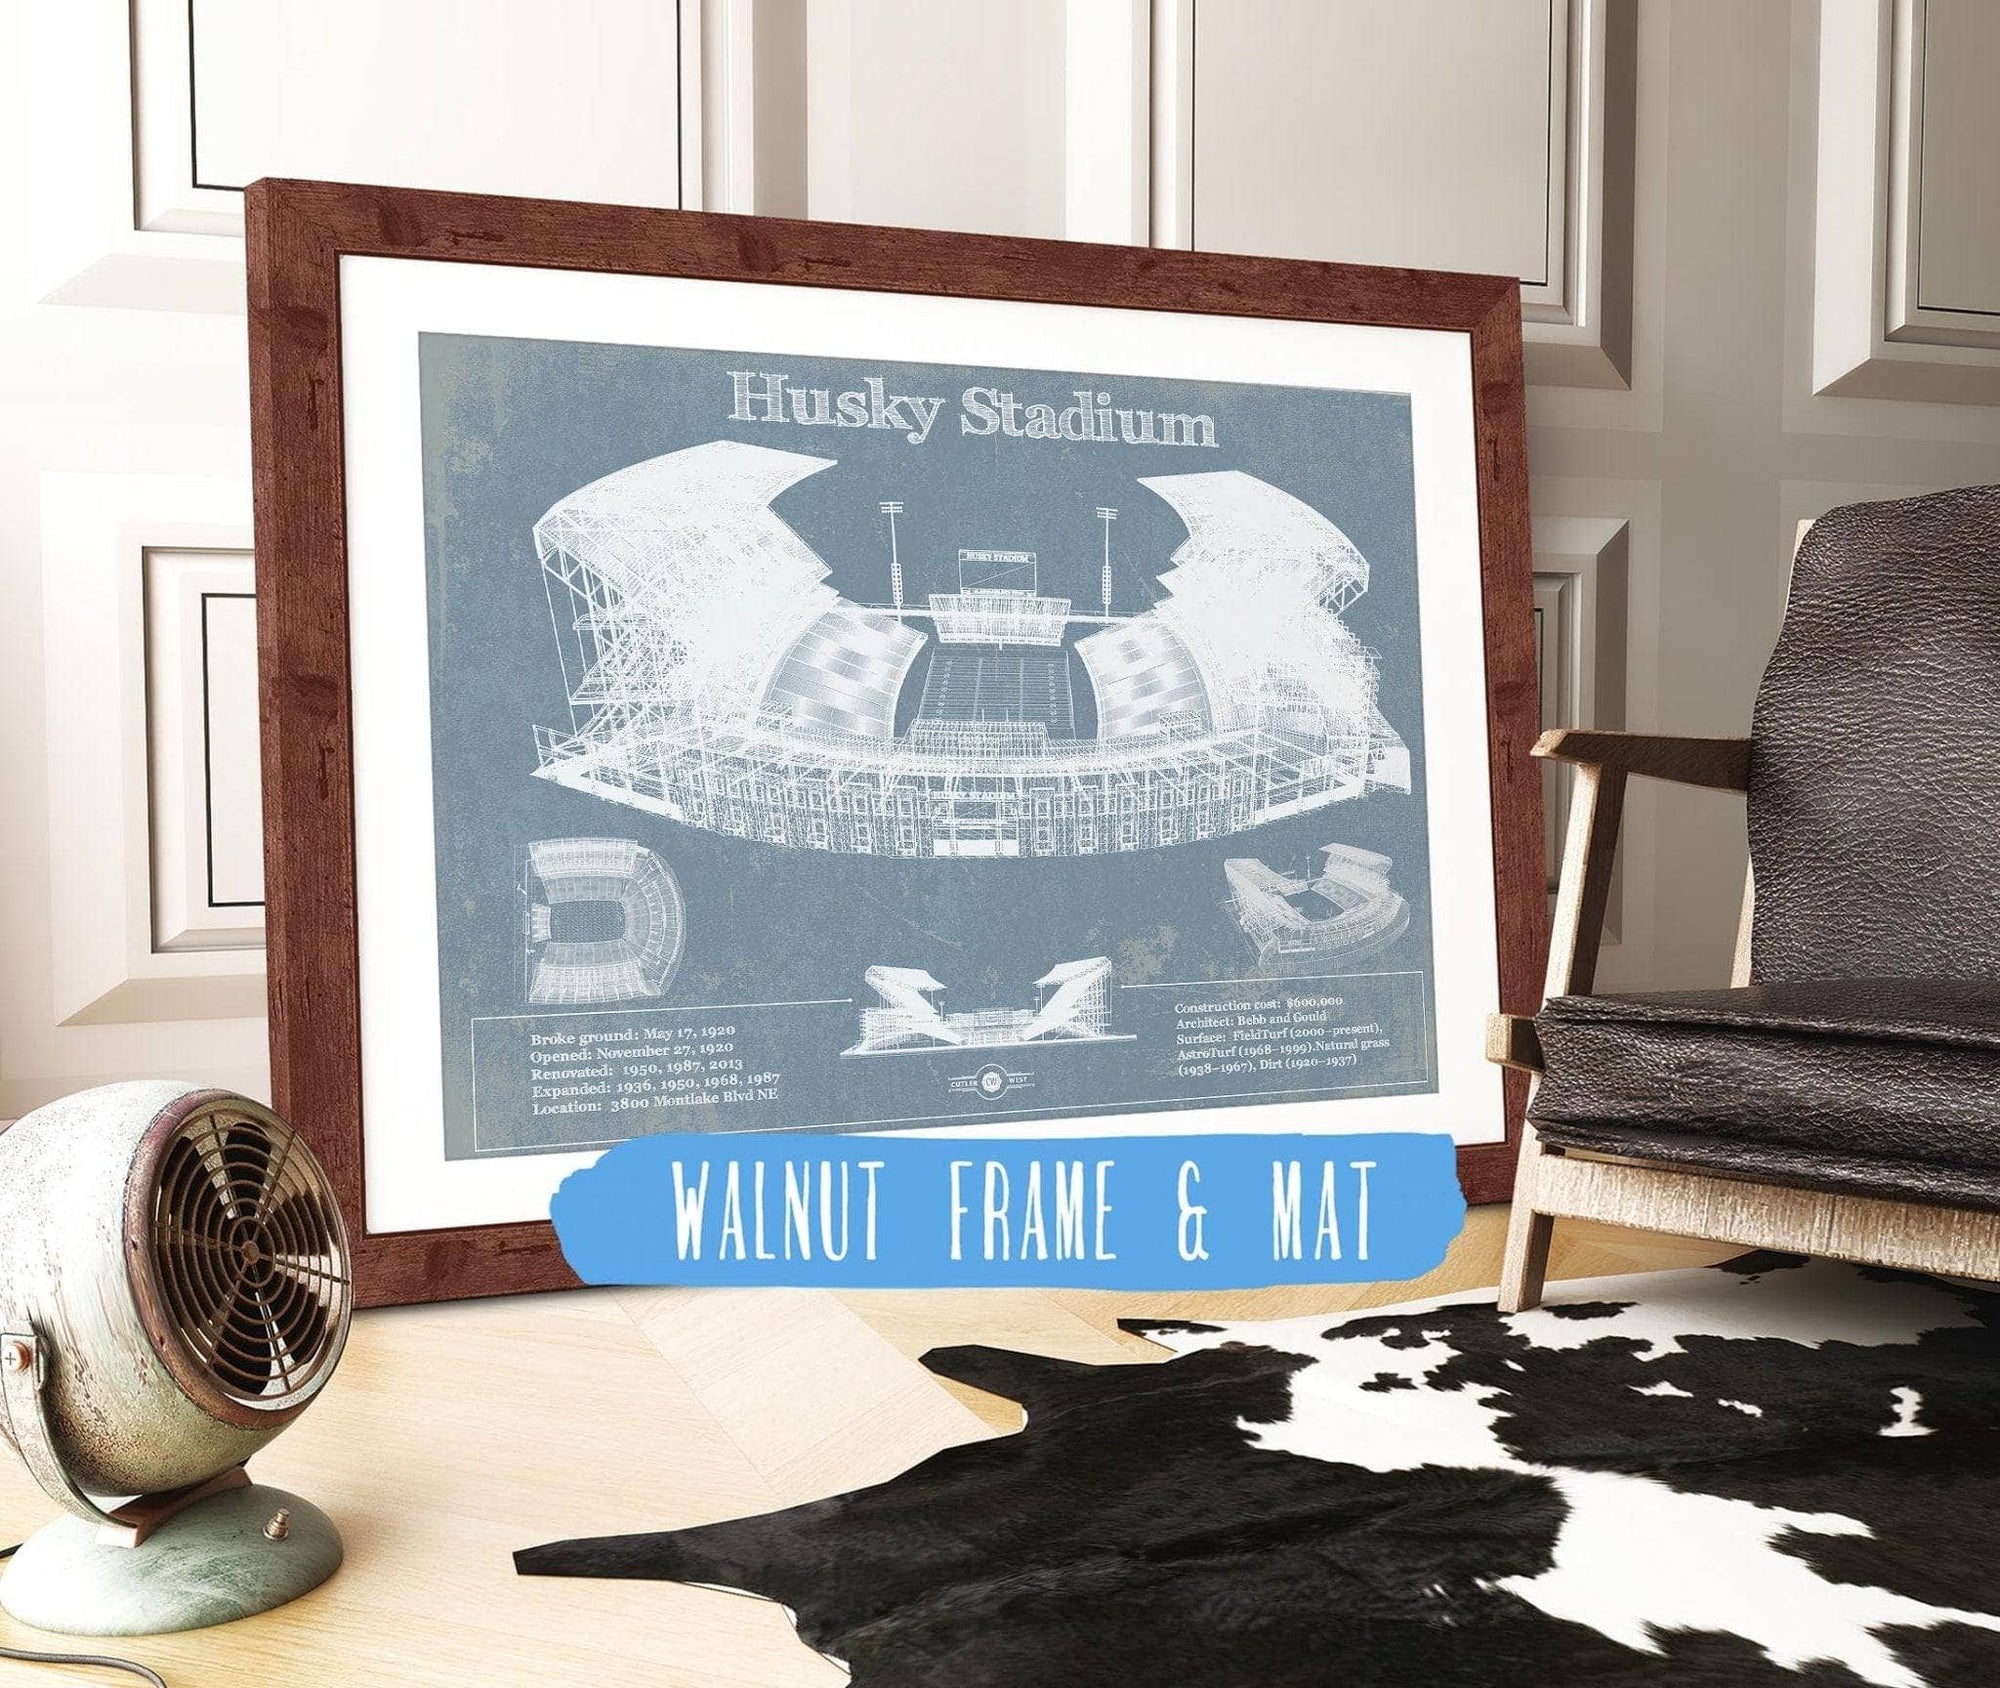 Cutler West 14" x 11" / Walnut Frame & Mat Washington Huskies Art Blue Version - Husky Stadium Vintage Stadium Blueprint Art Print 835000009-14"-x-11"59499